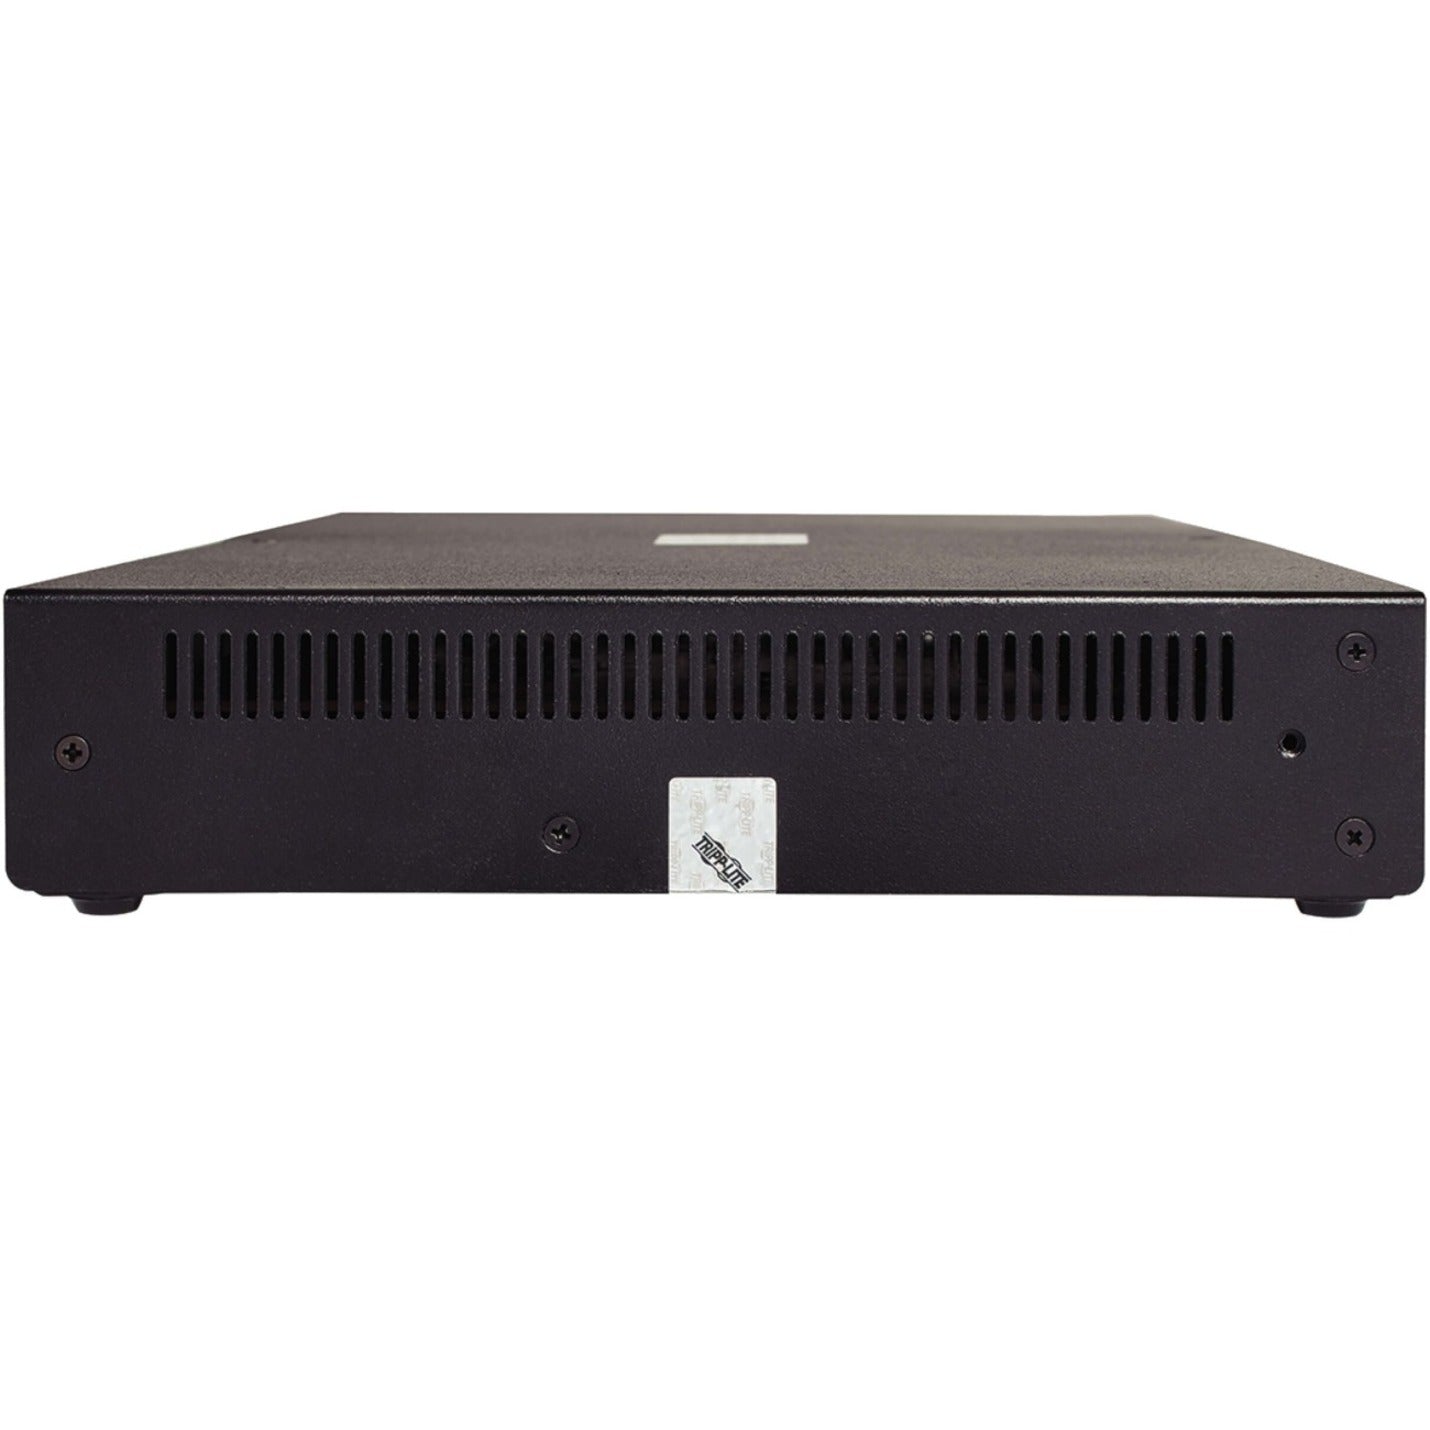 Tripp Lite B002A-DP1AC8 8-Port NIAP PP3.0-Certified DisplayPort KVM Switch, 3840 x 2160 Resolution, 3 Year Warranty